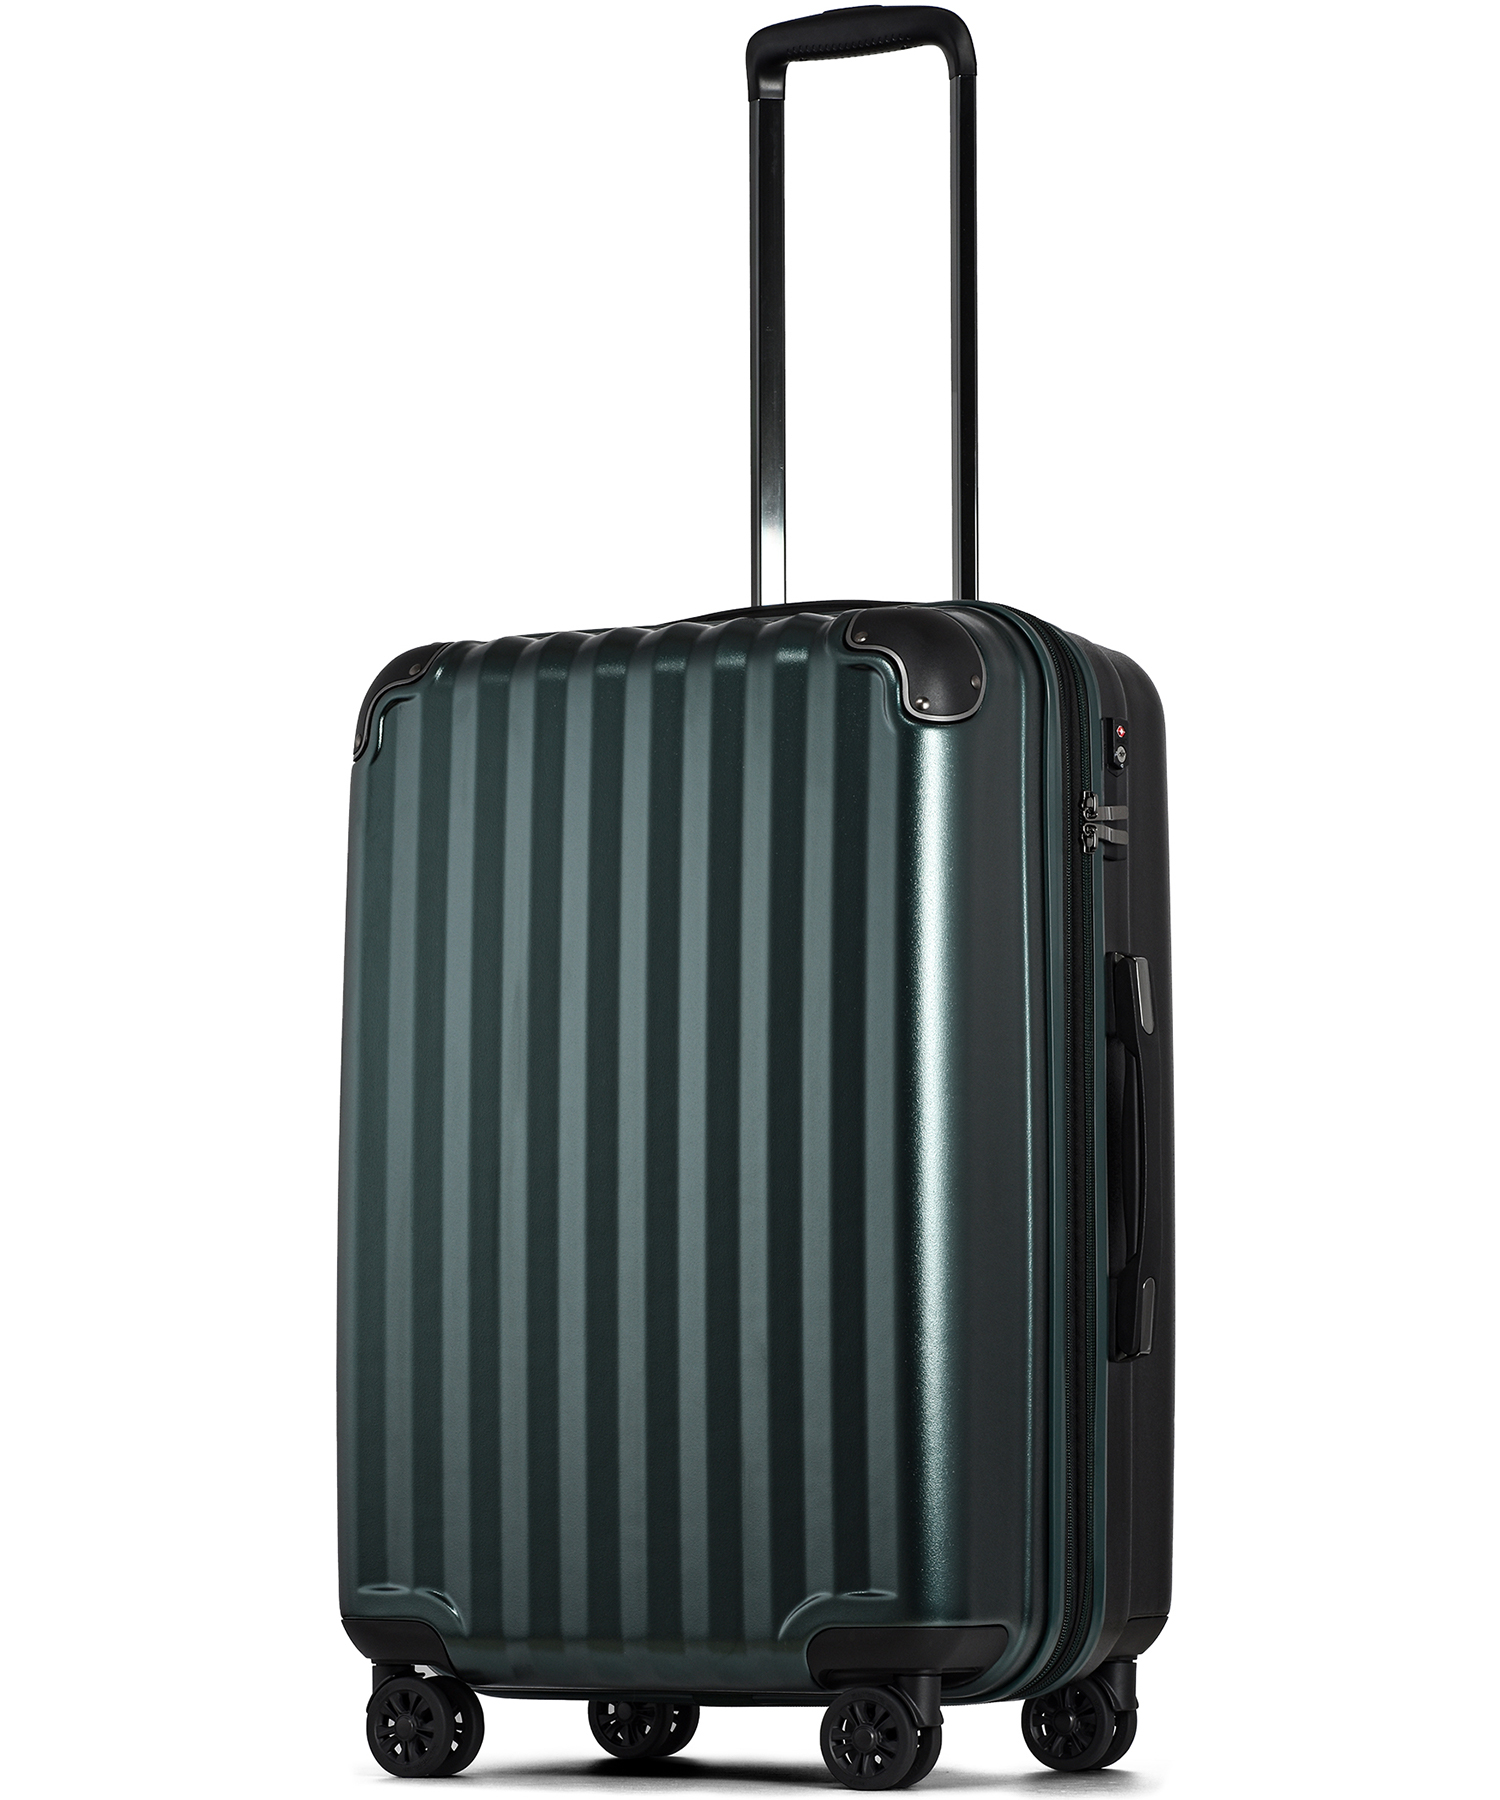 JP－Design】スーツケース LMサイズ 静音8輪キャスター 軽量 大容量 